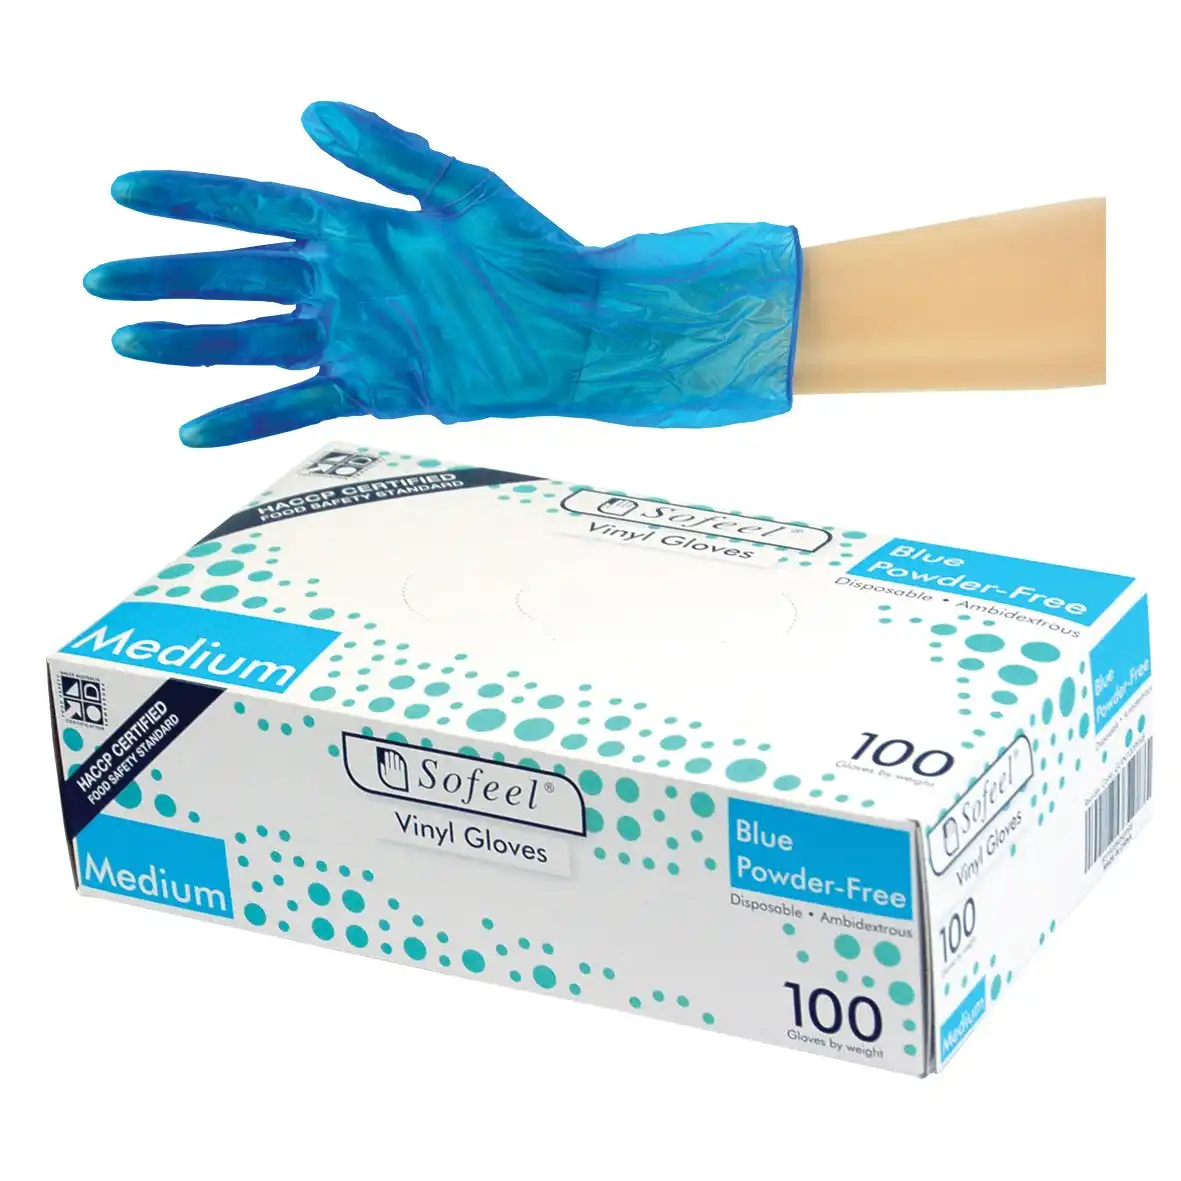 Sofeel Vinyl Powder Free Gloves 4.5g Medium Blue HACCP Grade 100 Box